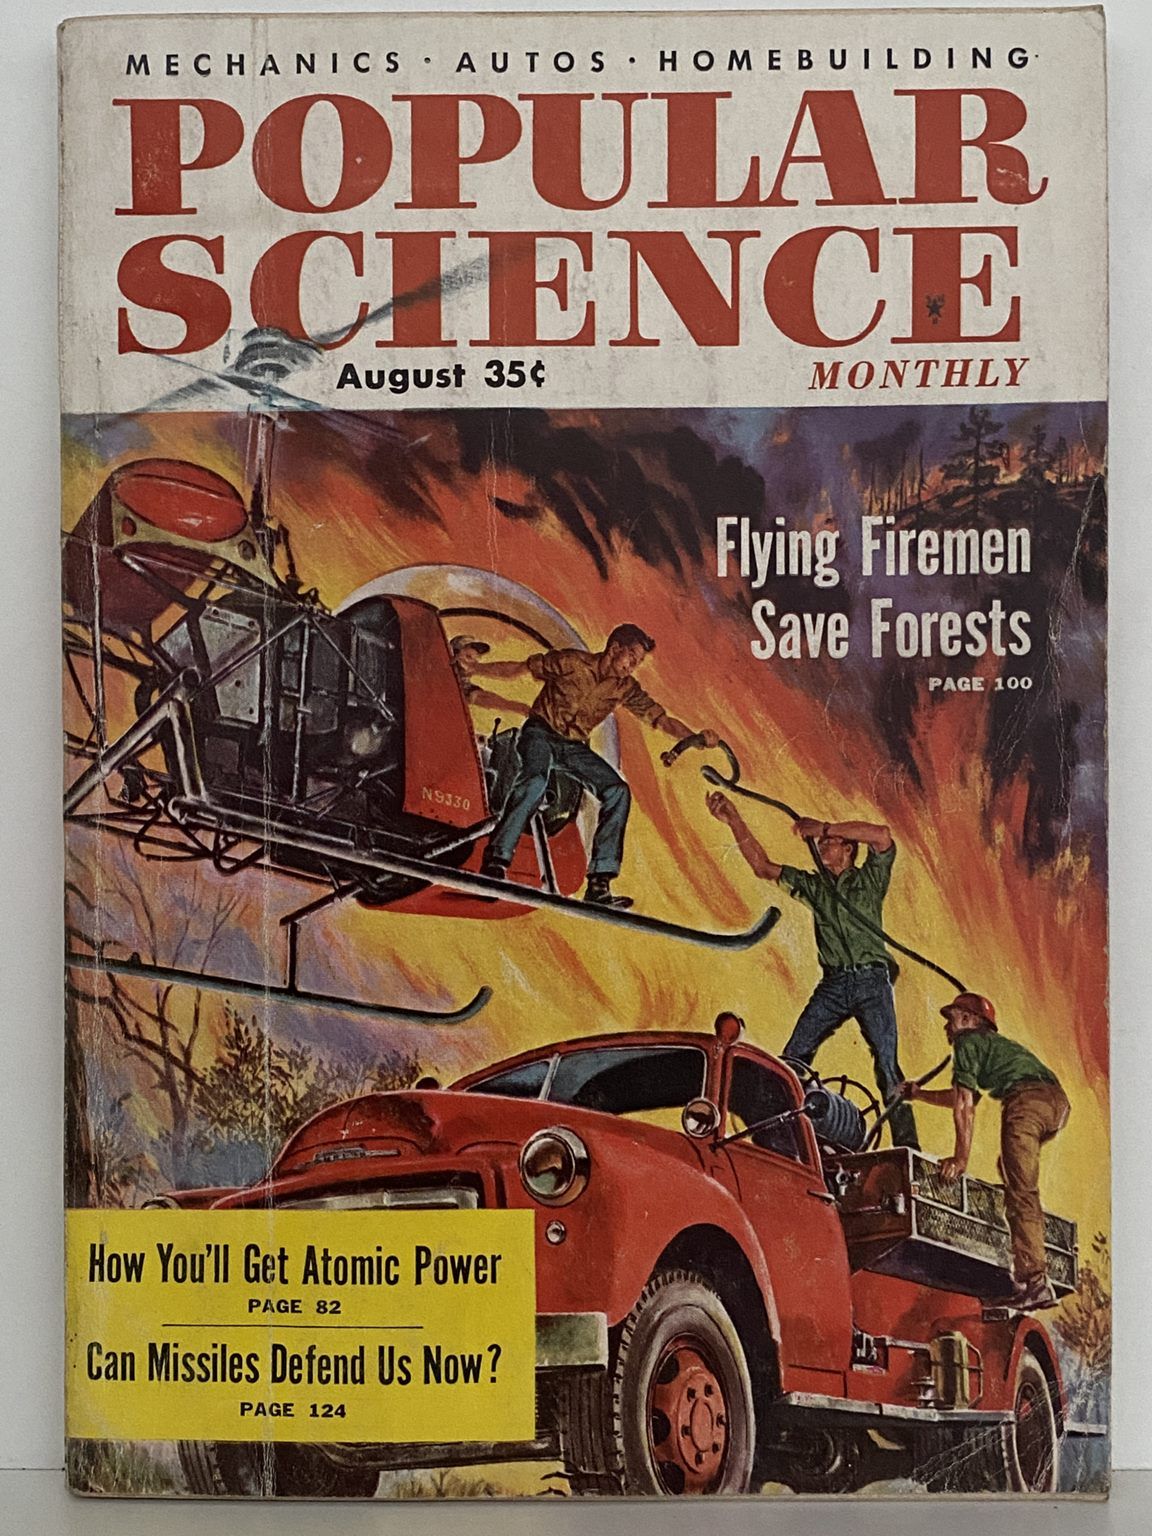 VINTAGE MAGAZINE: Popular Science, Vol. 167, No. 2 - August 1955